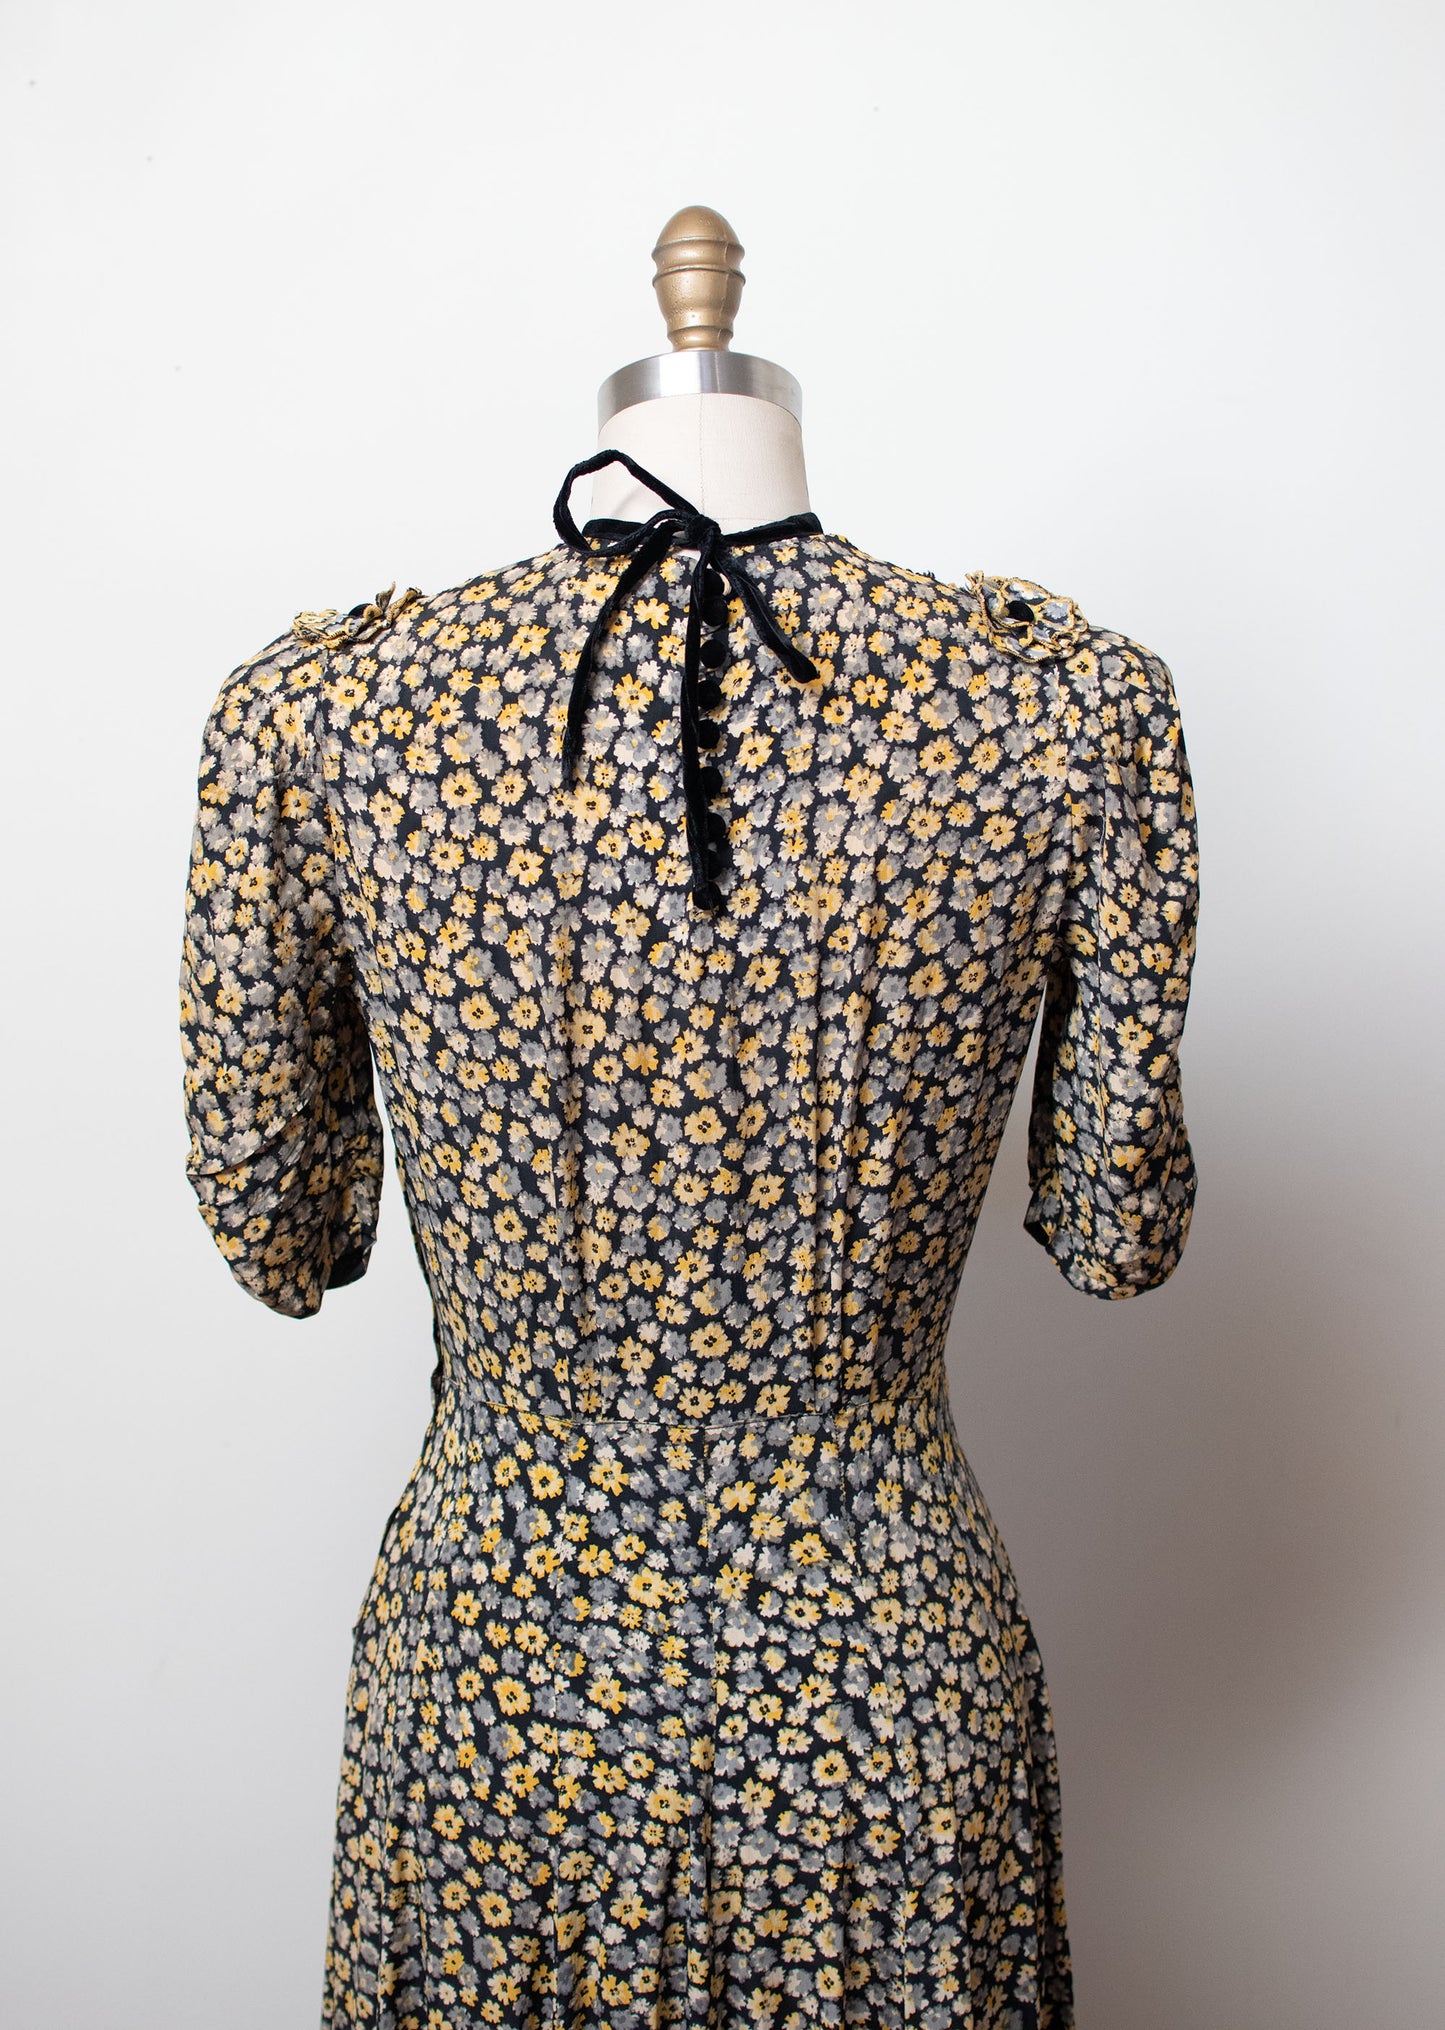 1930s Floral Print Dress | Caryle